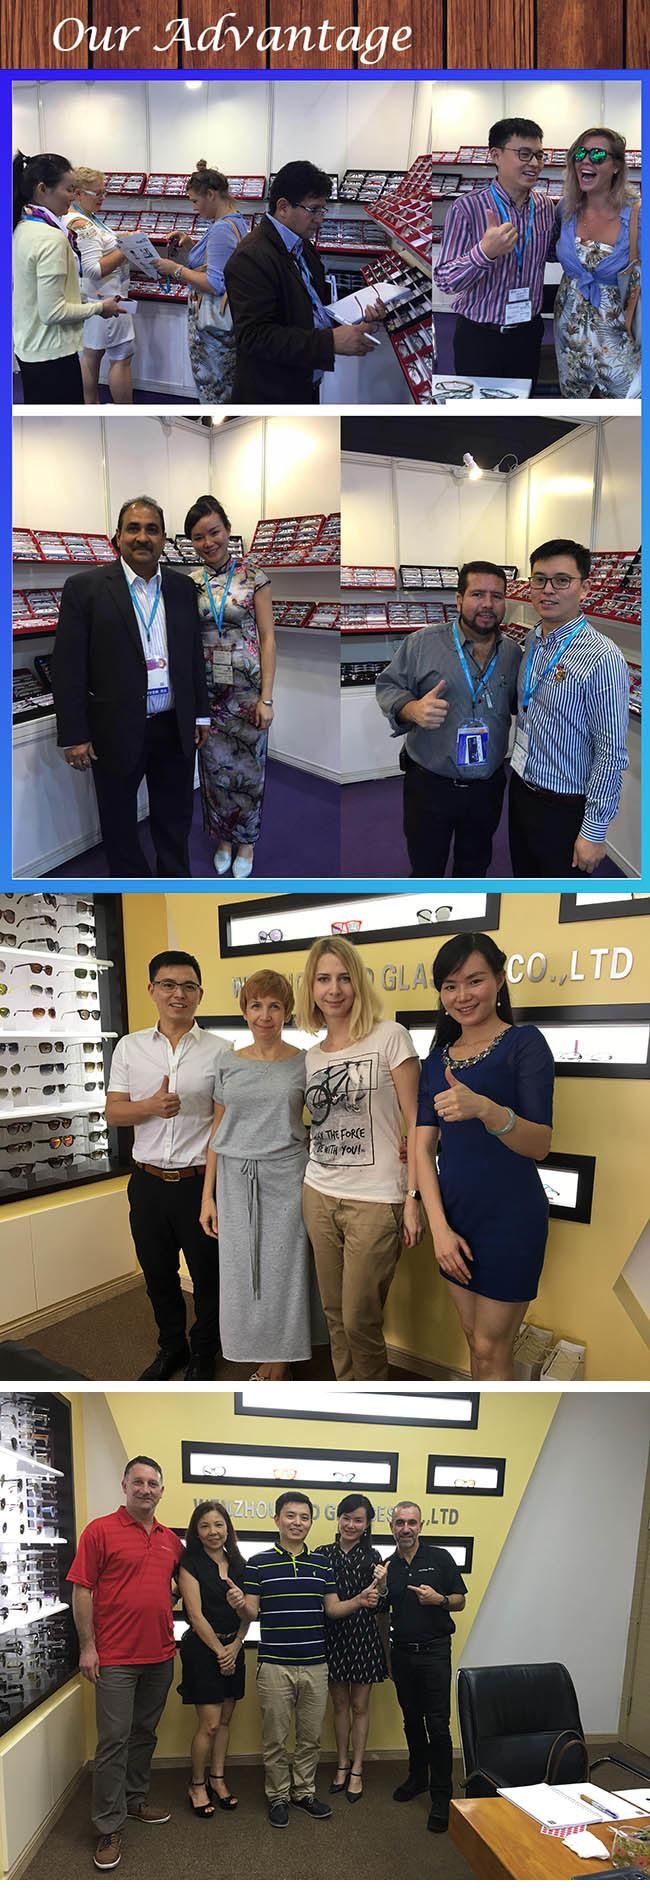 Popular Fashion Style Design China Manufacture Wholesale Make Order Frame Sunglasses